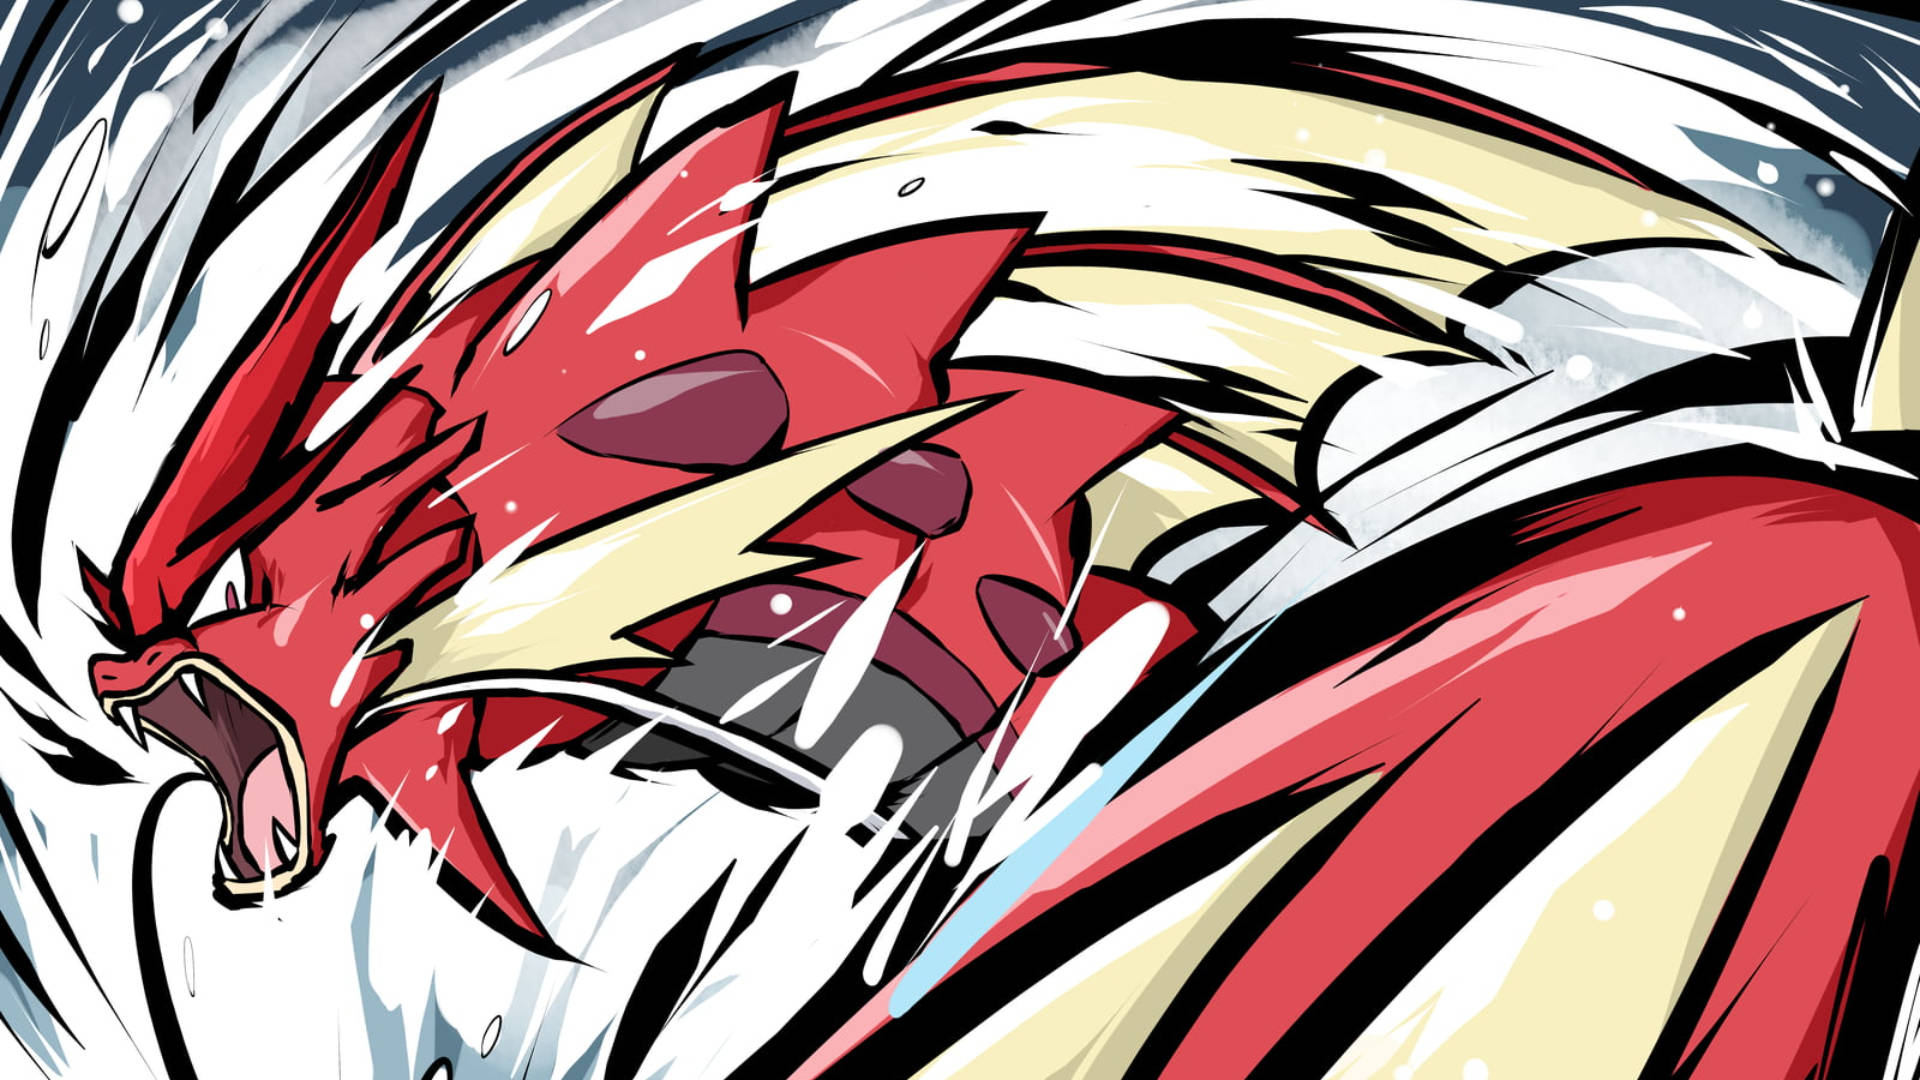 Shiny Mega Gyarados - The Legendary Dragon Of Kanto